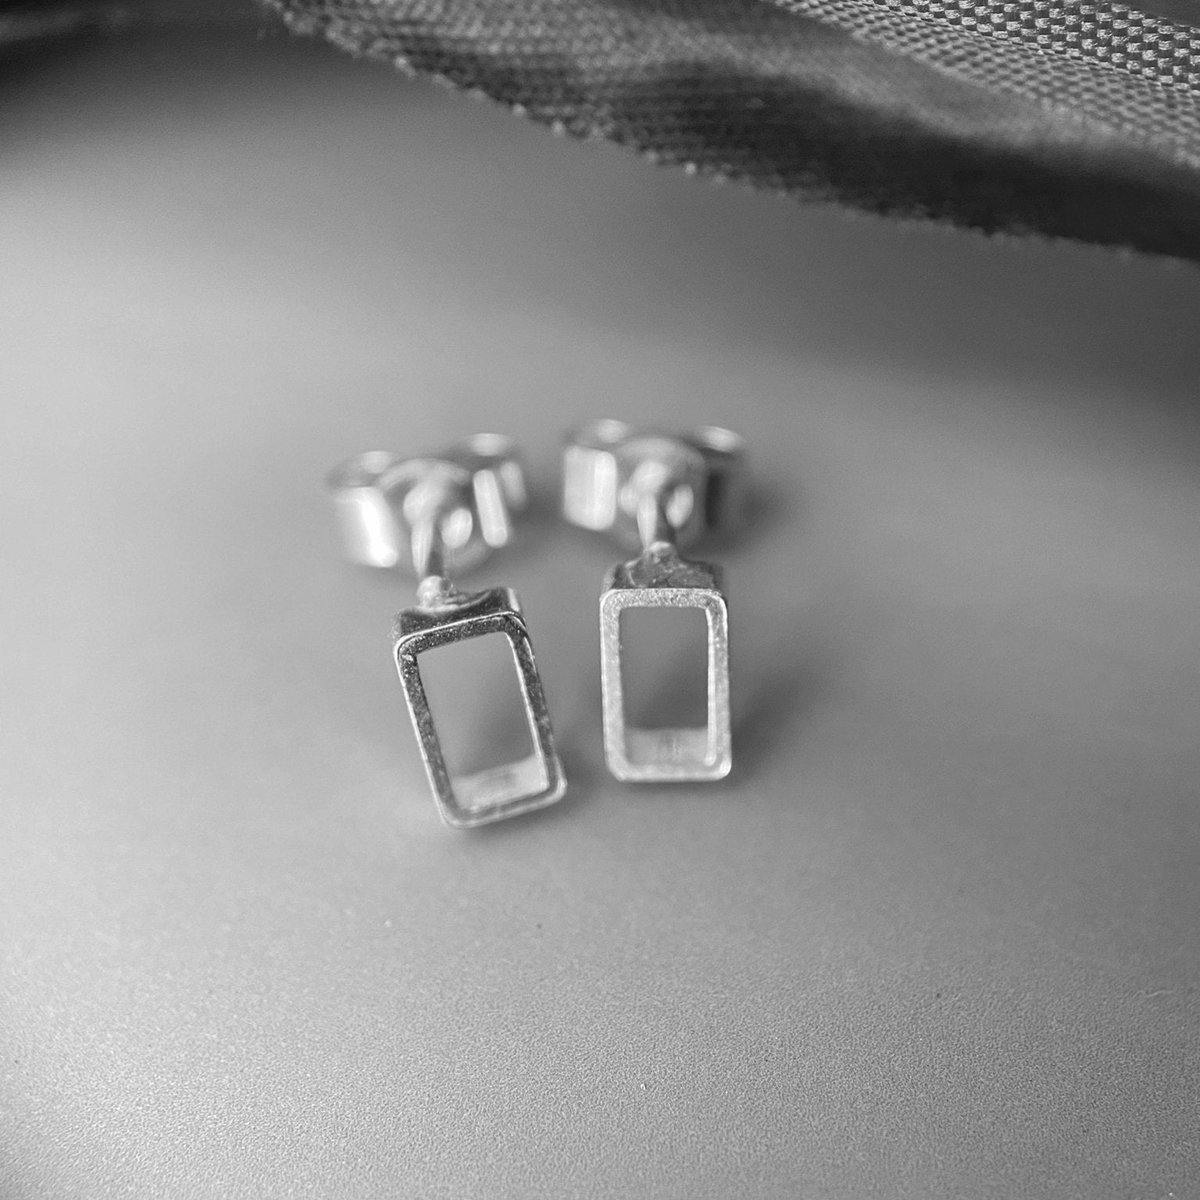 Tiny Sterling Silver Rectangle Stud Earrings tuppu.net/19265225 #shopsmall #inbizhour ##UKGiftHour #UKHashtags #HandmadeHour #bizbubble #MHHSBD #giftideas #Tiny